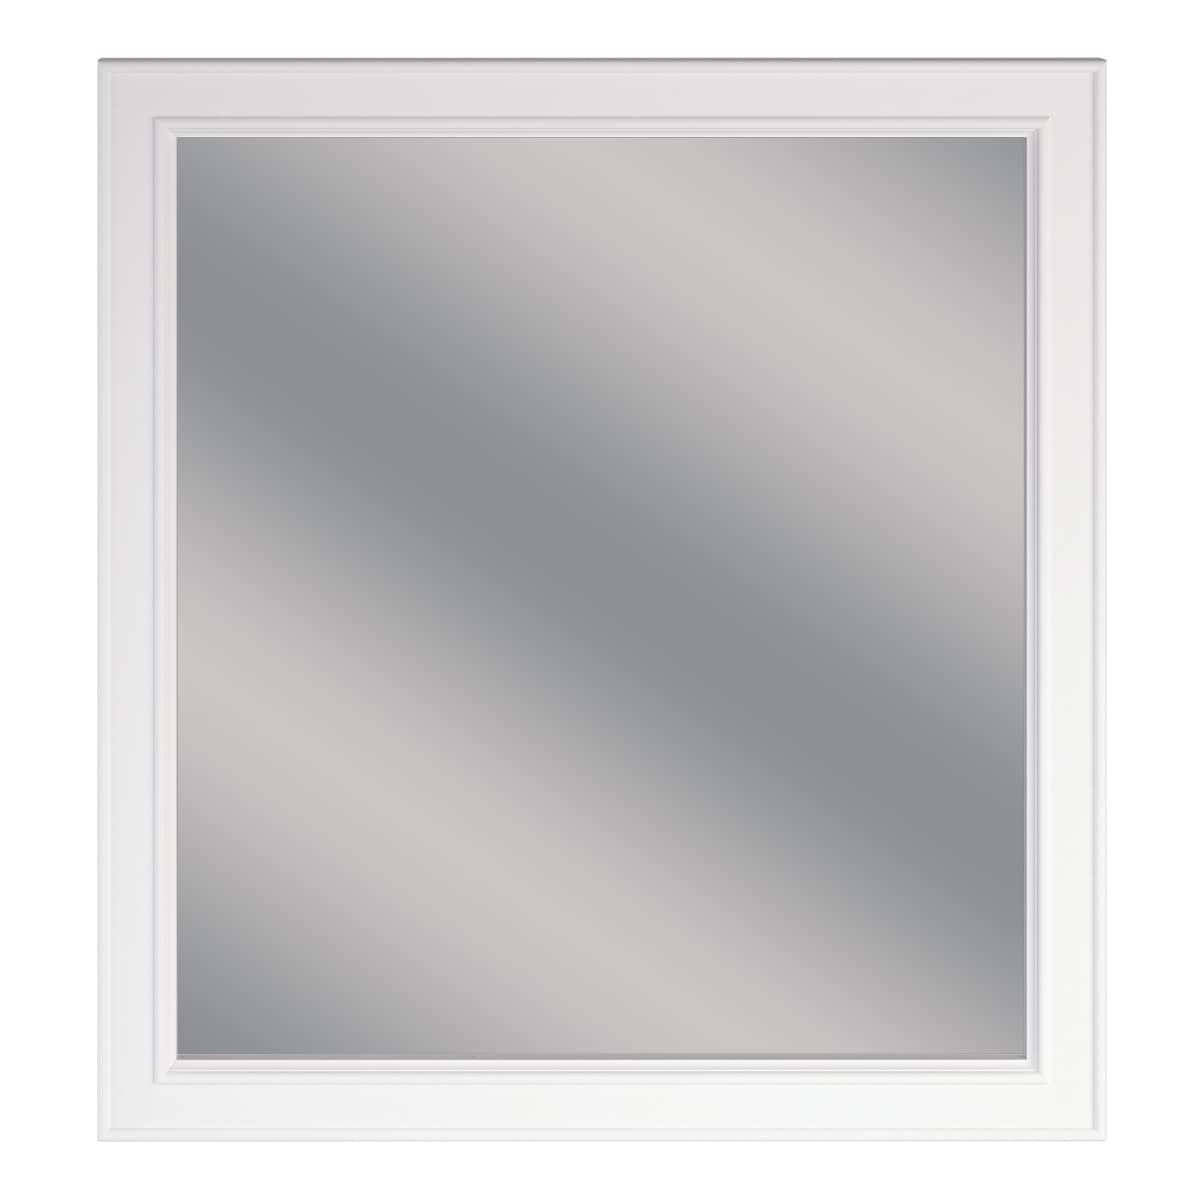 Wrightsville 28-in x 30-in White Rectangular Framed Bathroom Vanity Mirror | - allen + roth 1116MR-28-201